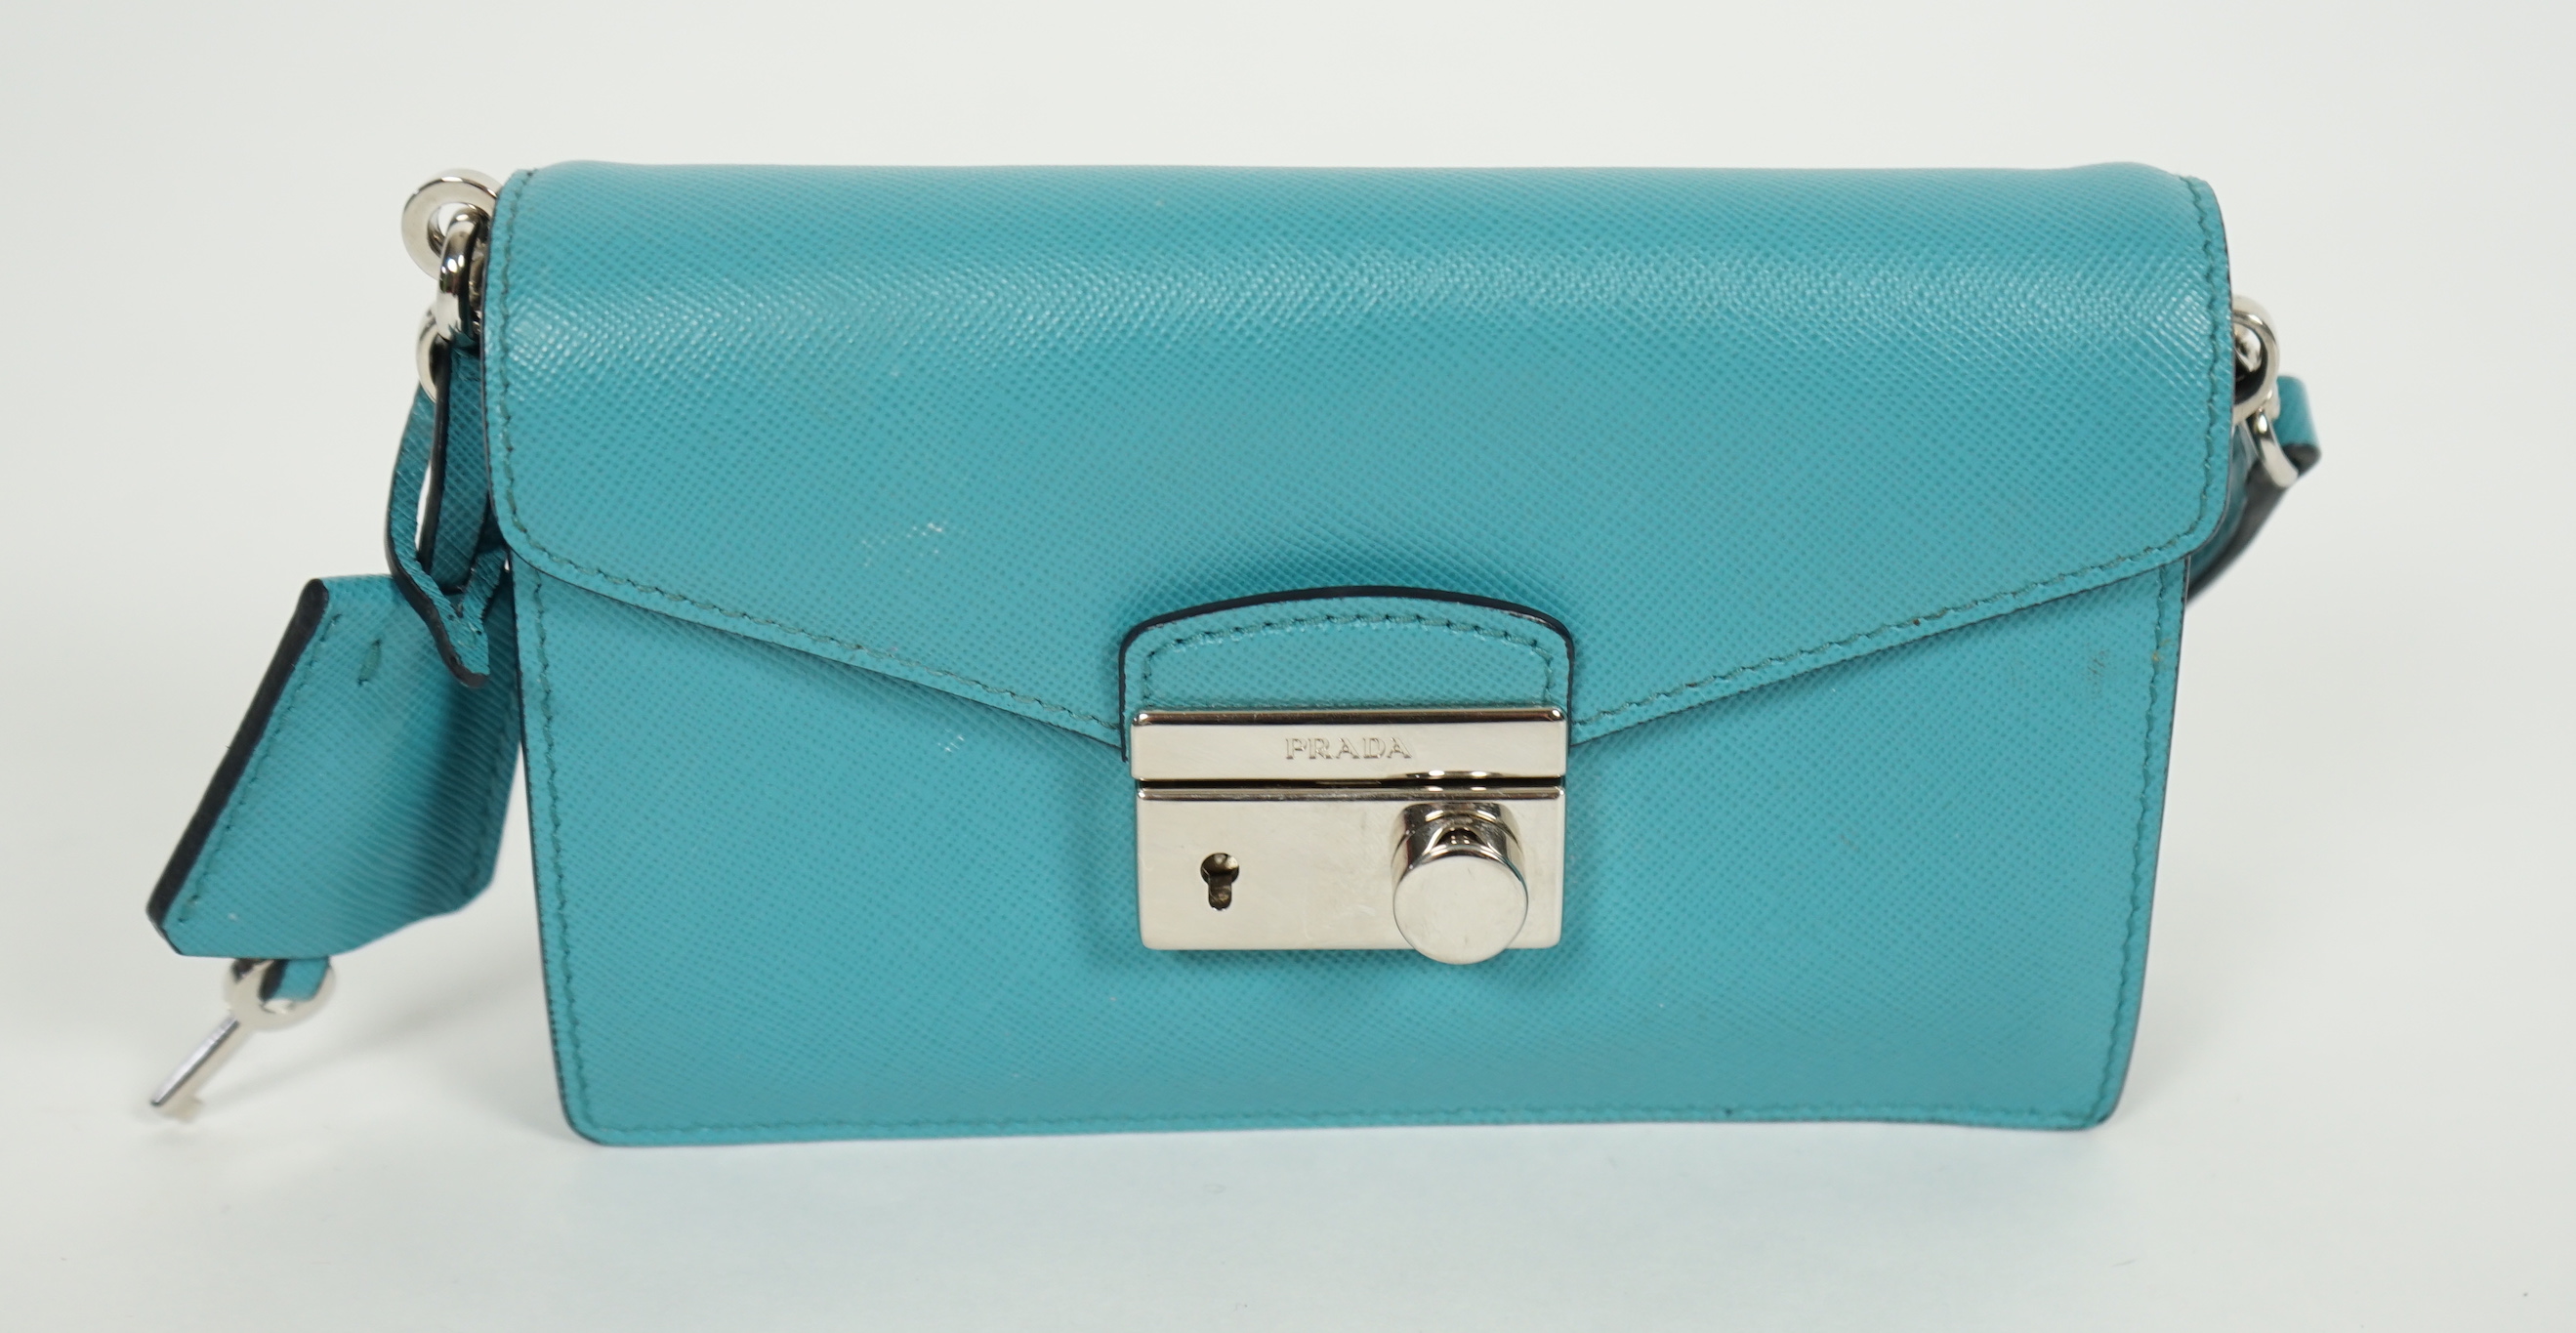 A Prada Saffiano Lux Mini Sound bag in Turchese, silver-tone hardware, with bag, box and - Image 4 of 8